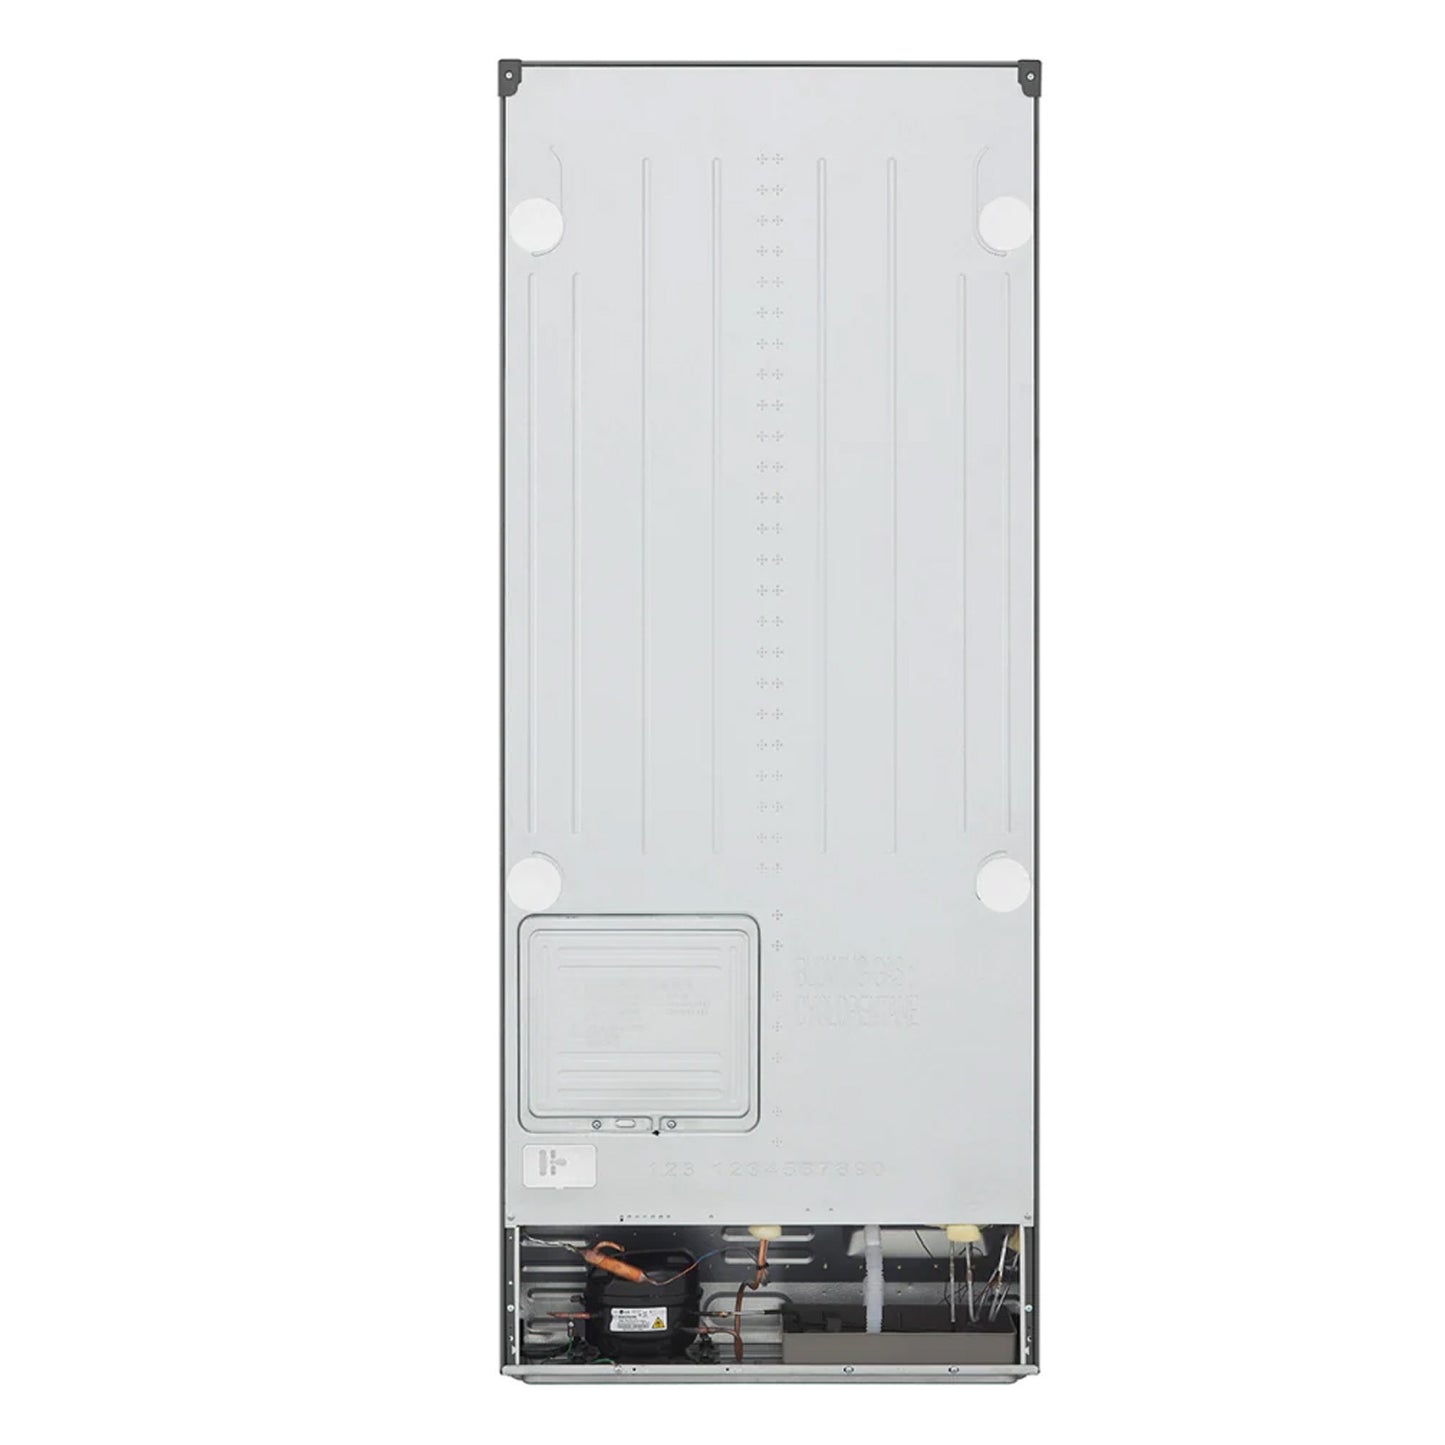 LG GN-B372PLGB 375L Top Freezer Refrigerator with Smart Inverter Compressor